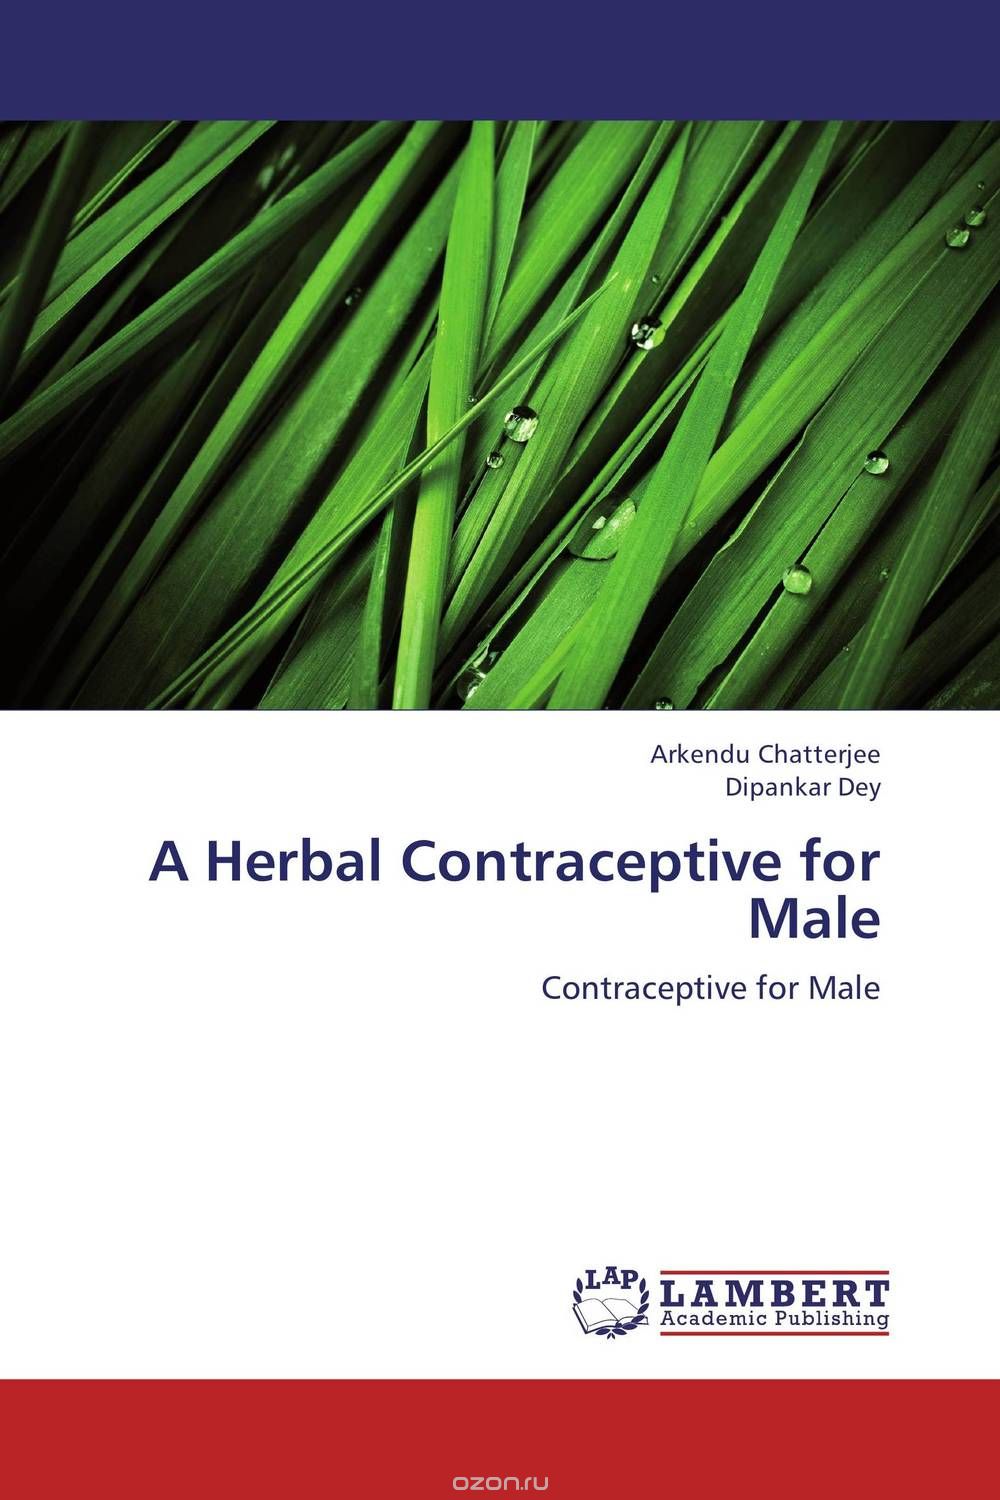 Скачать книгу "A Herbal Contraceptive for Male"